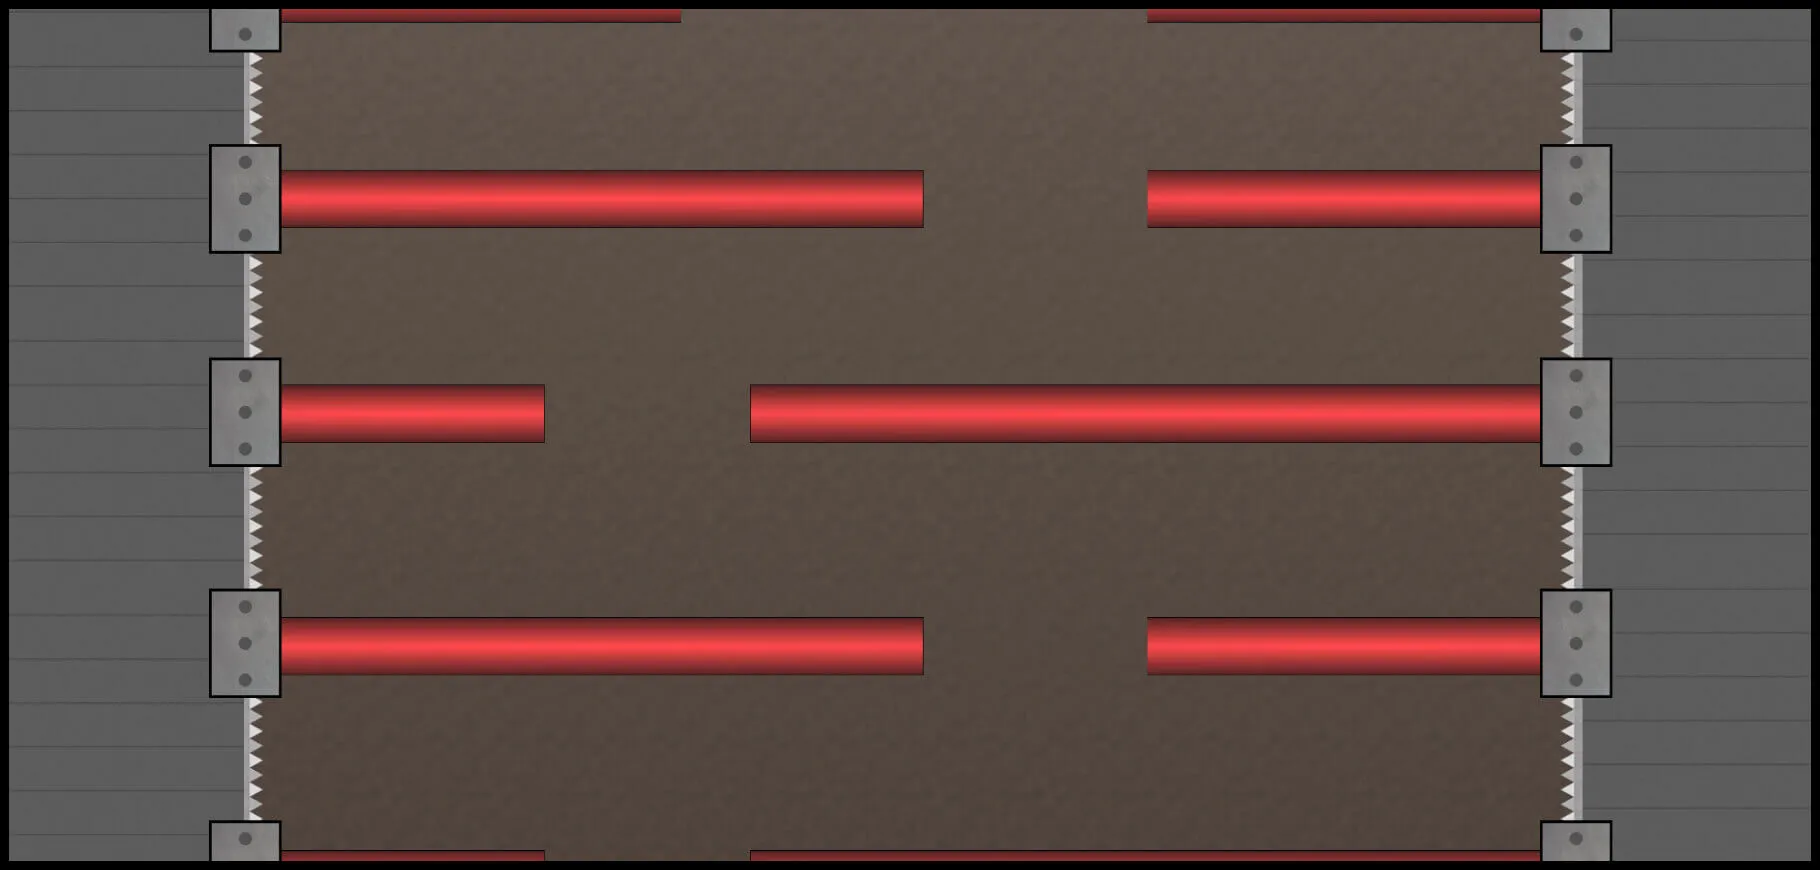 vertigo level screenshot from the game reflex runner.